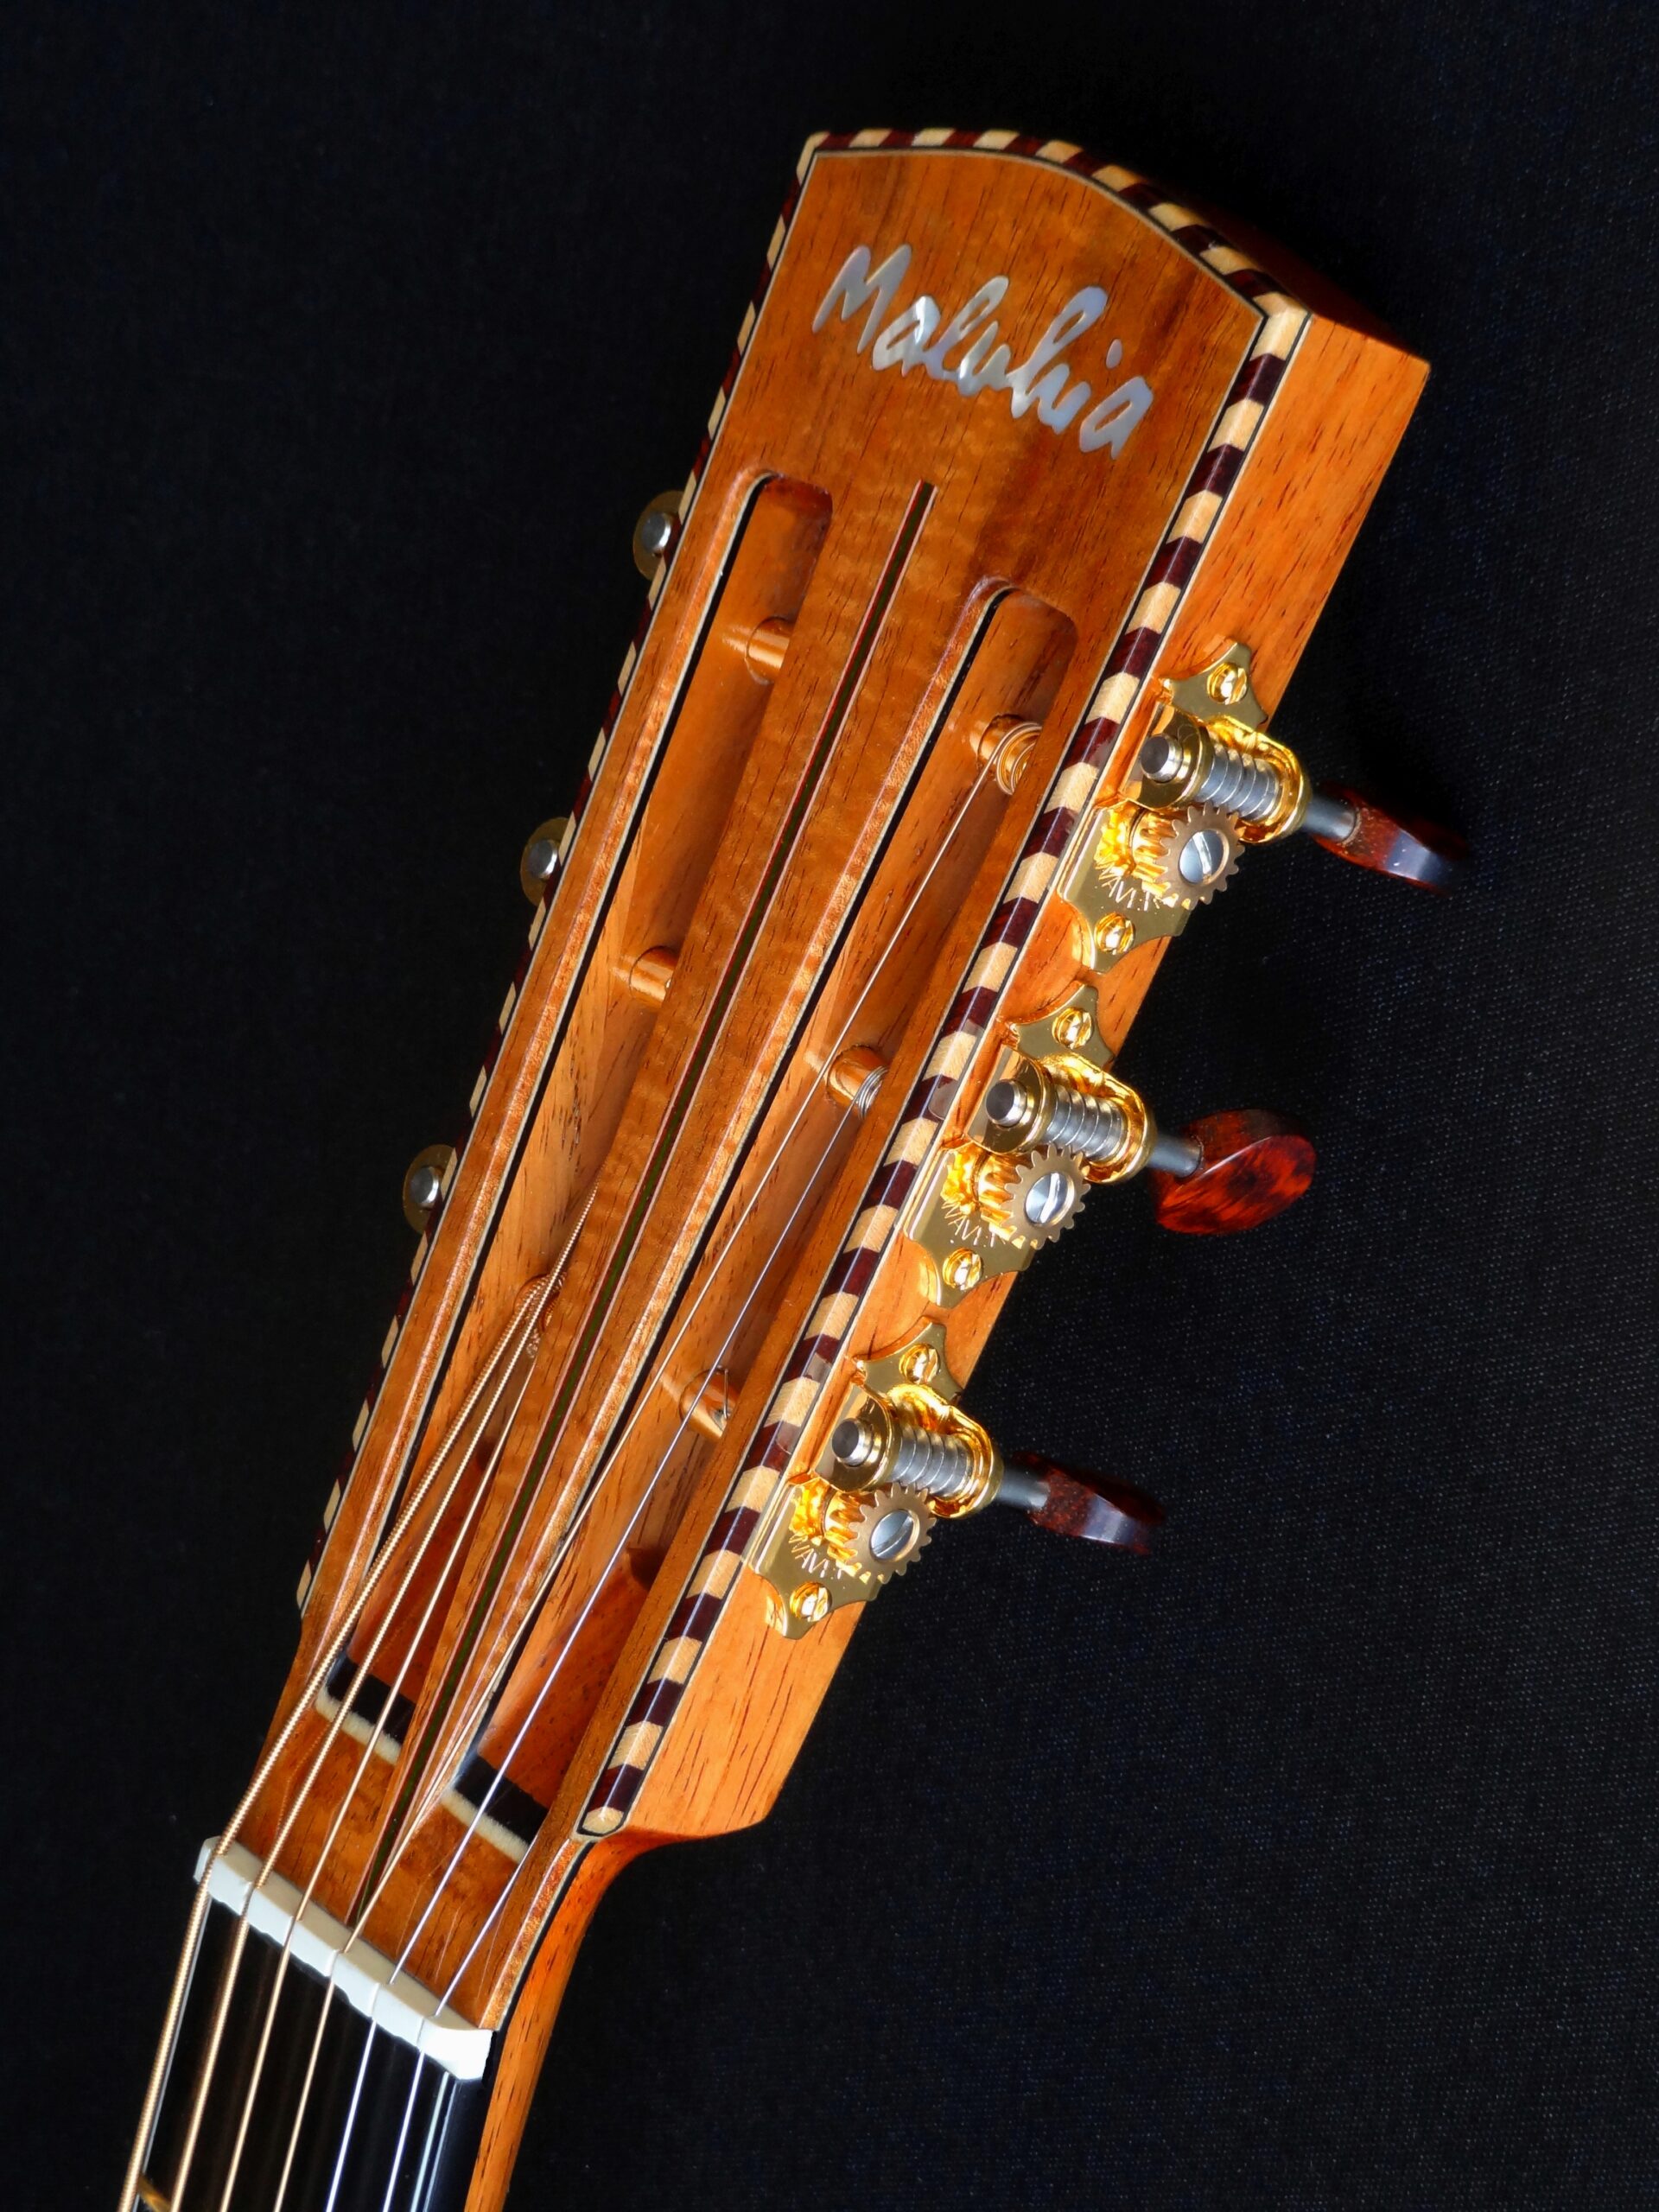 Custom guitars. Inlaid headstock of koa guitar with rope binding